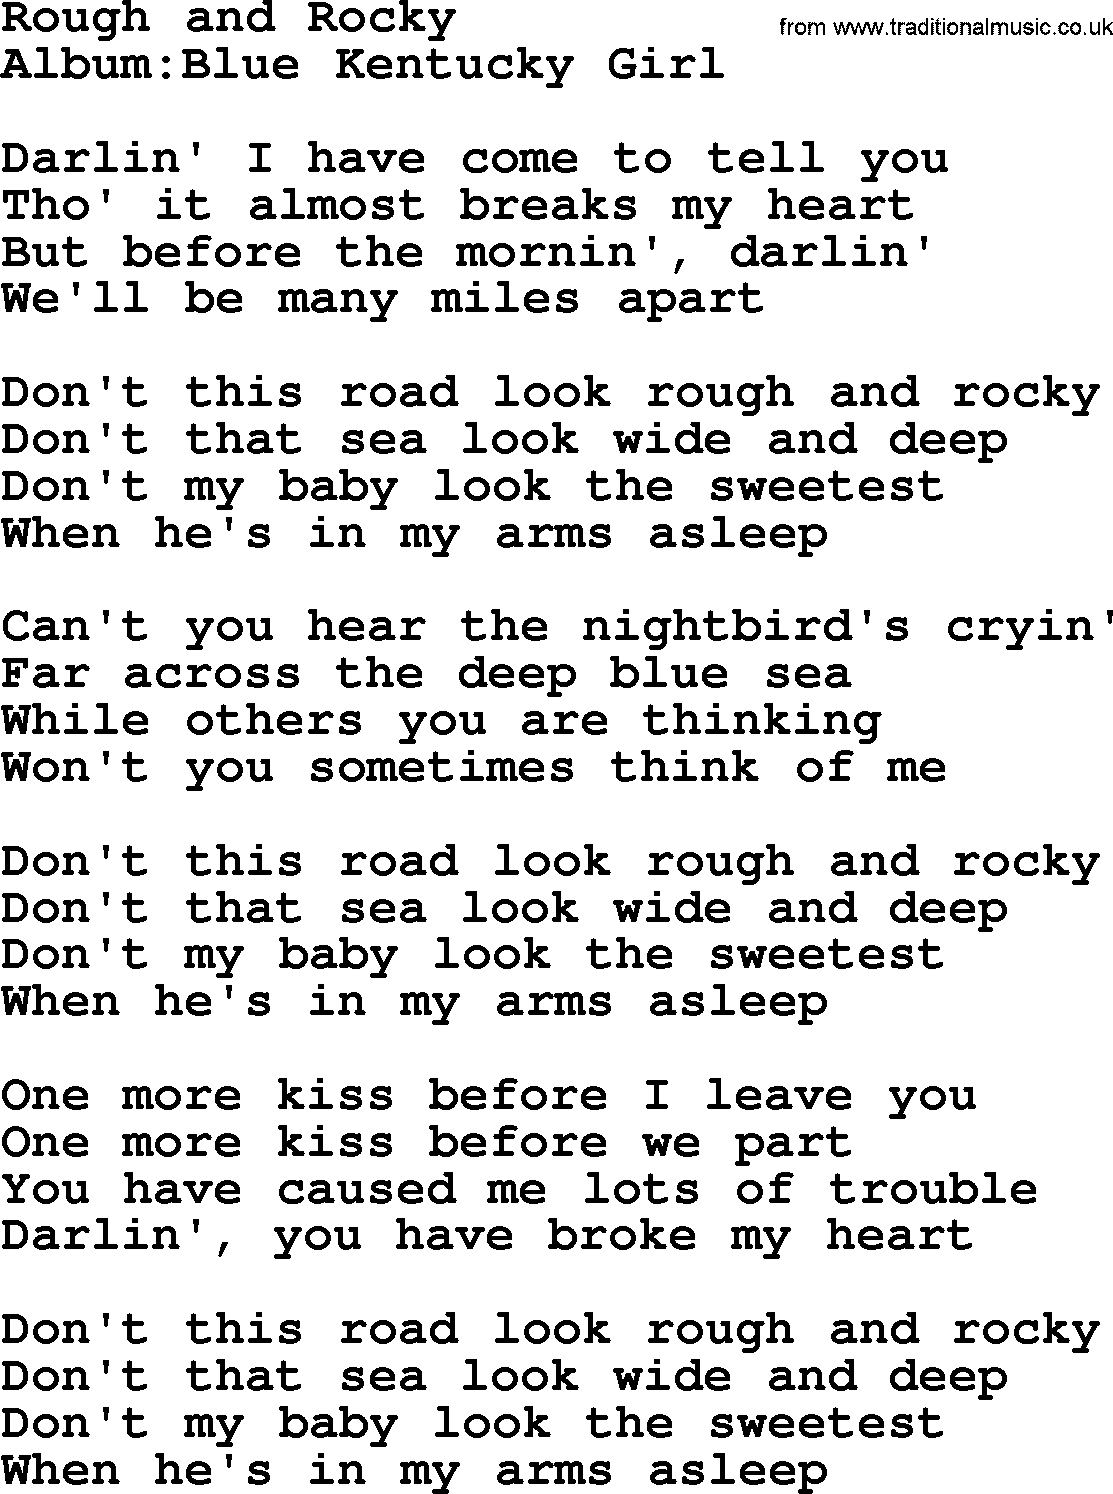 Emmylou Harris song: Rough and Rocky lyrics